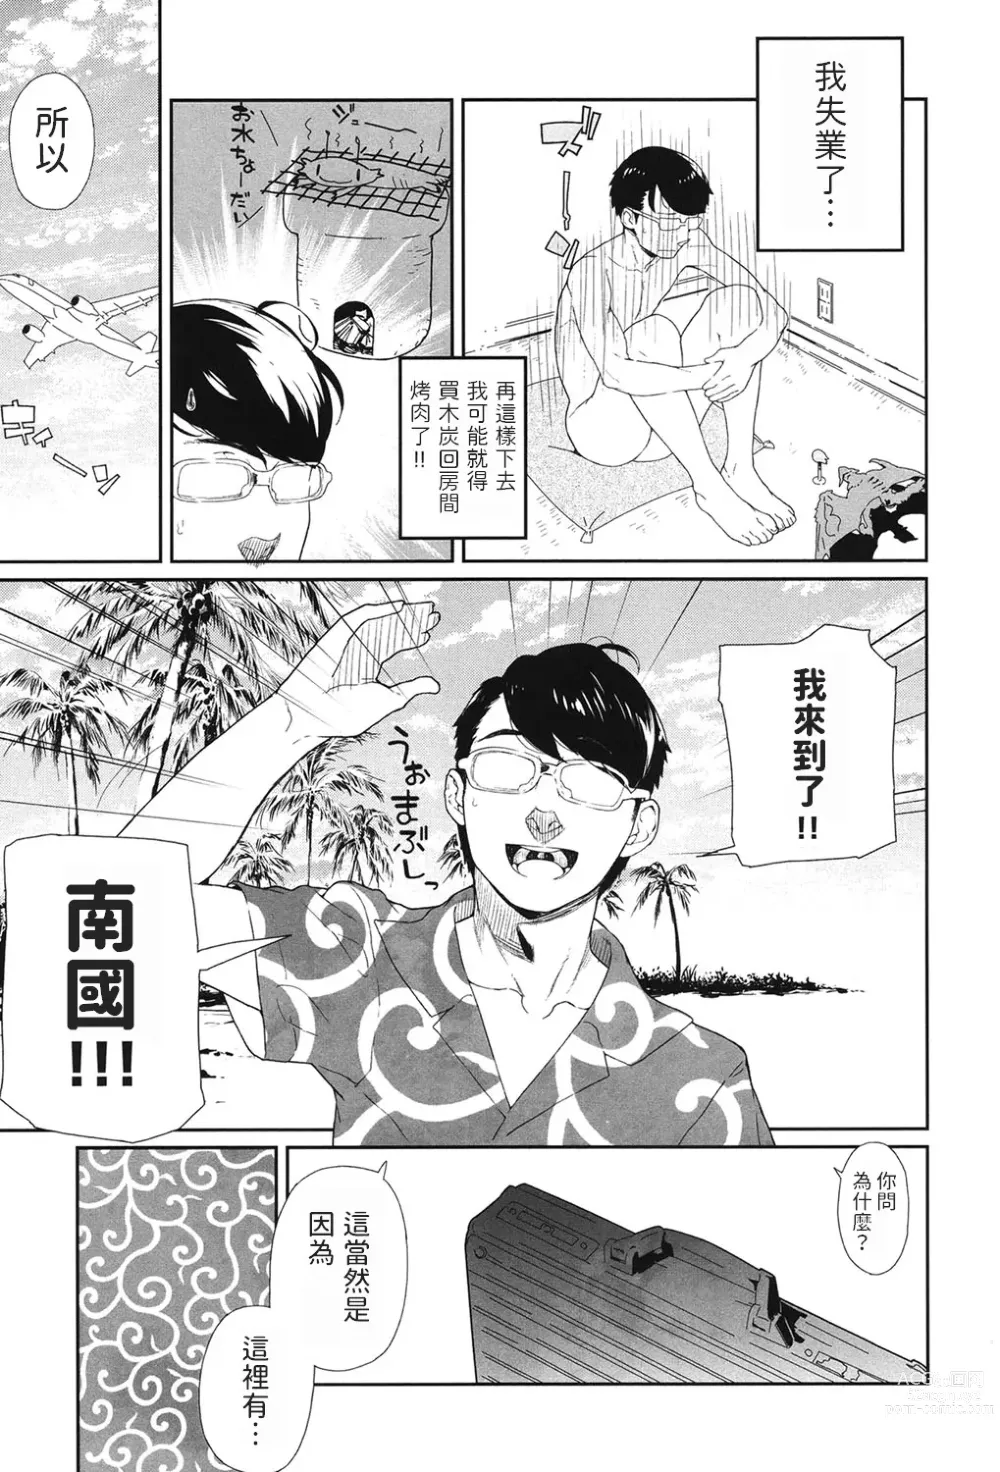 Page 1 of manga Tasatsu Tour